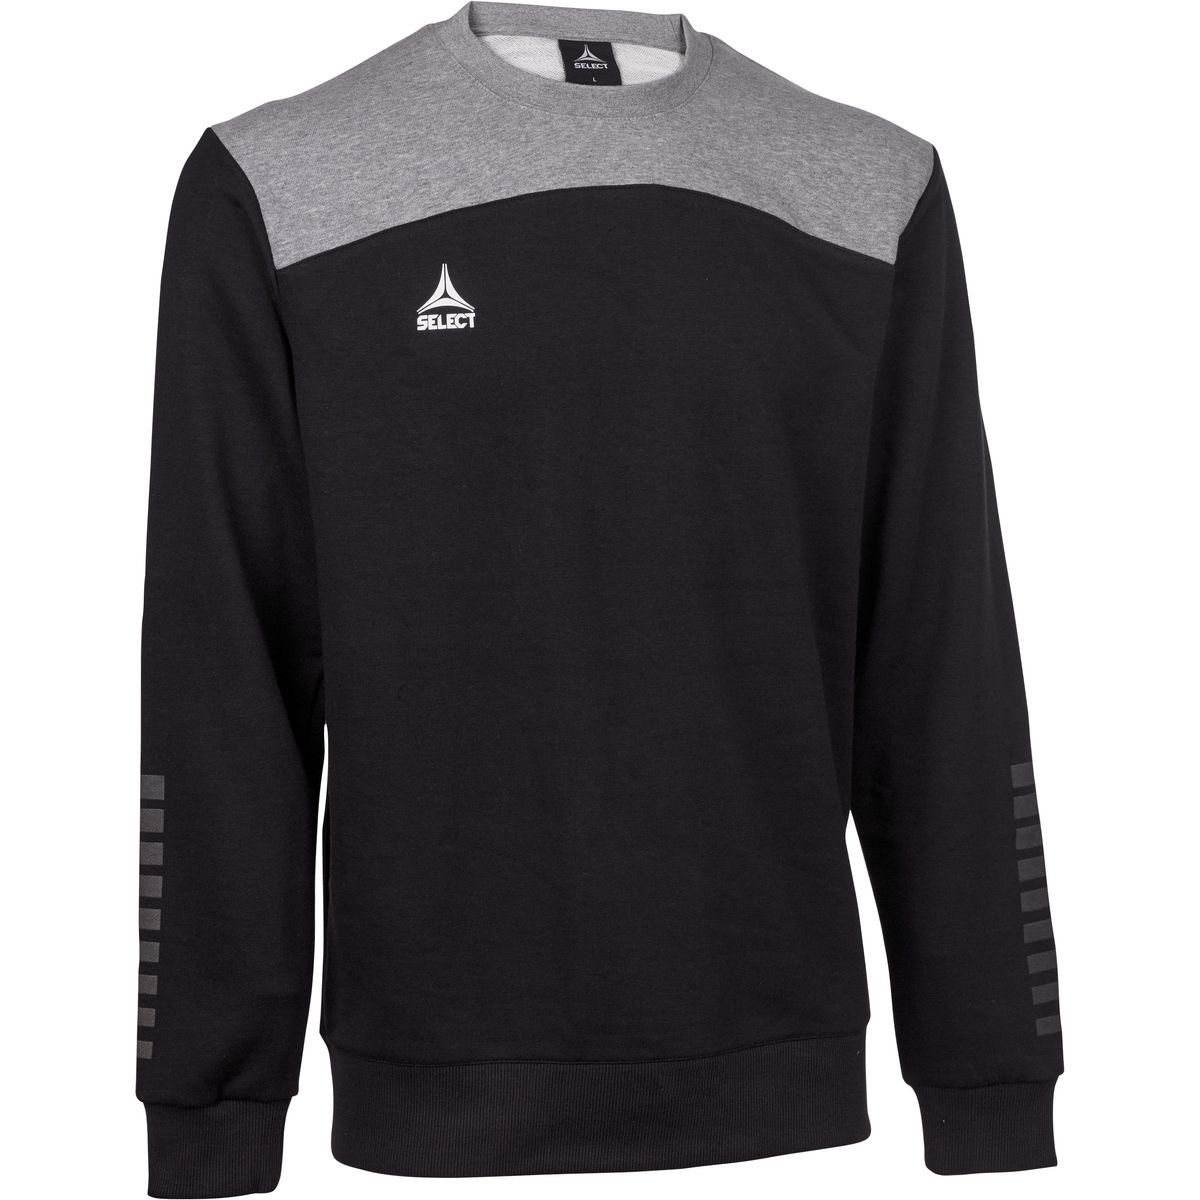 Select Oxford v22 Kapuzensweater